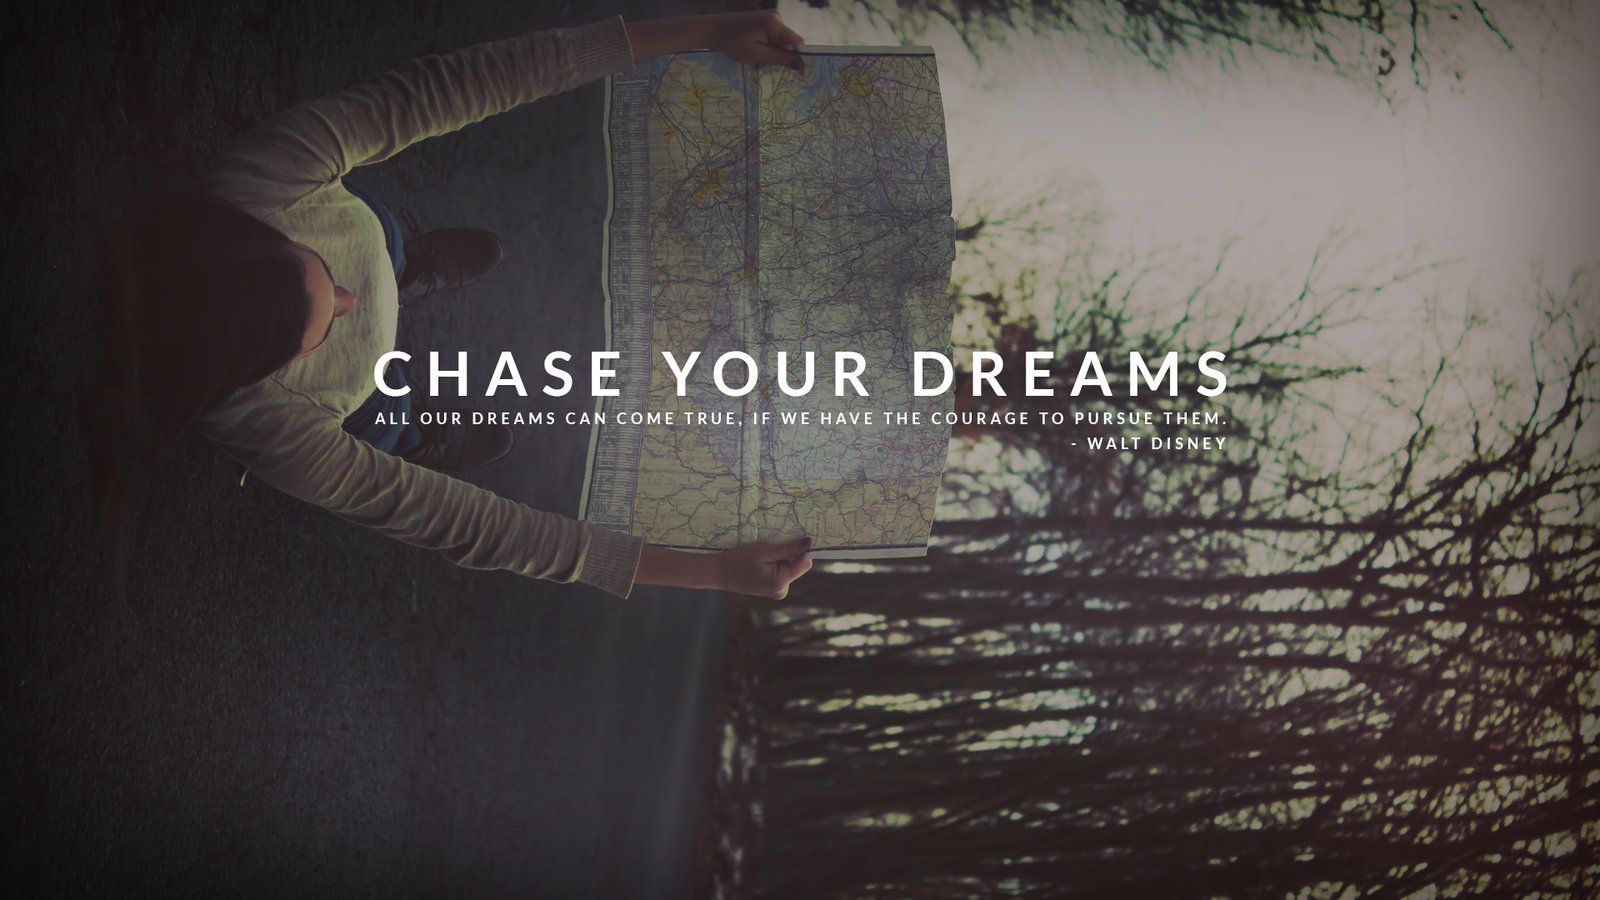 Chase Your Dreams Wallpaper. Dreams Wallpaper, Sweet Dreams Wallpaper and Follow Your Dreams Wallpaper